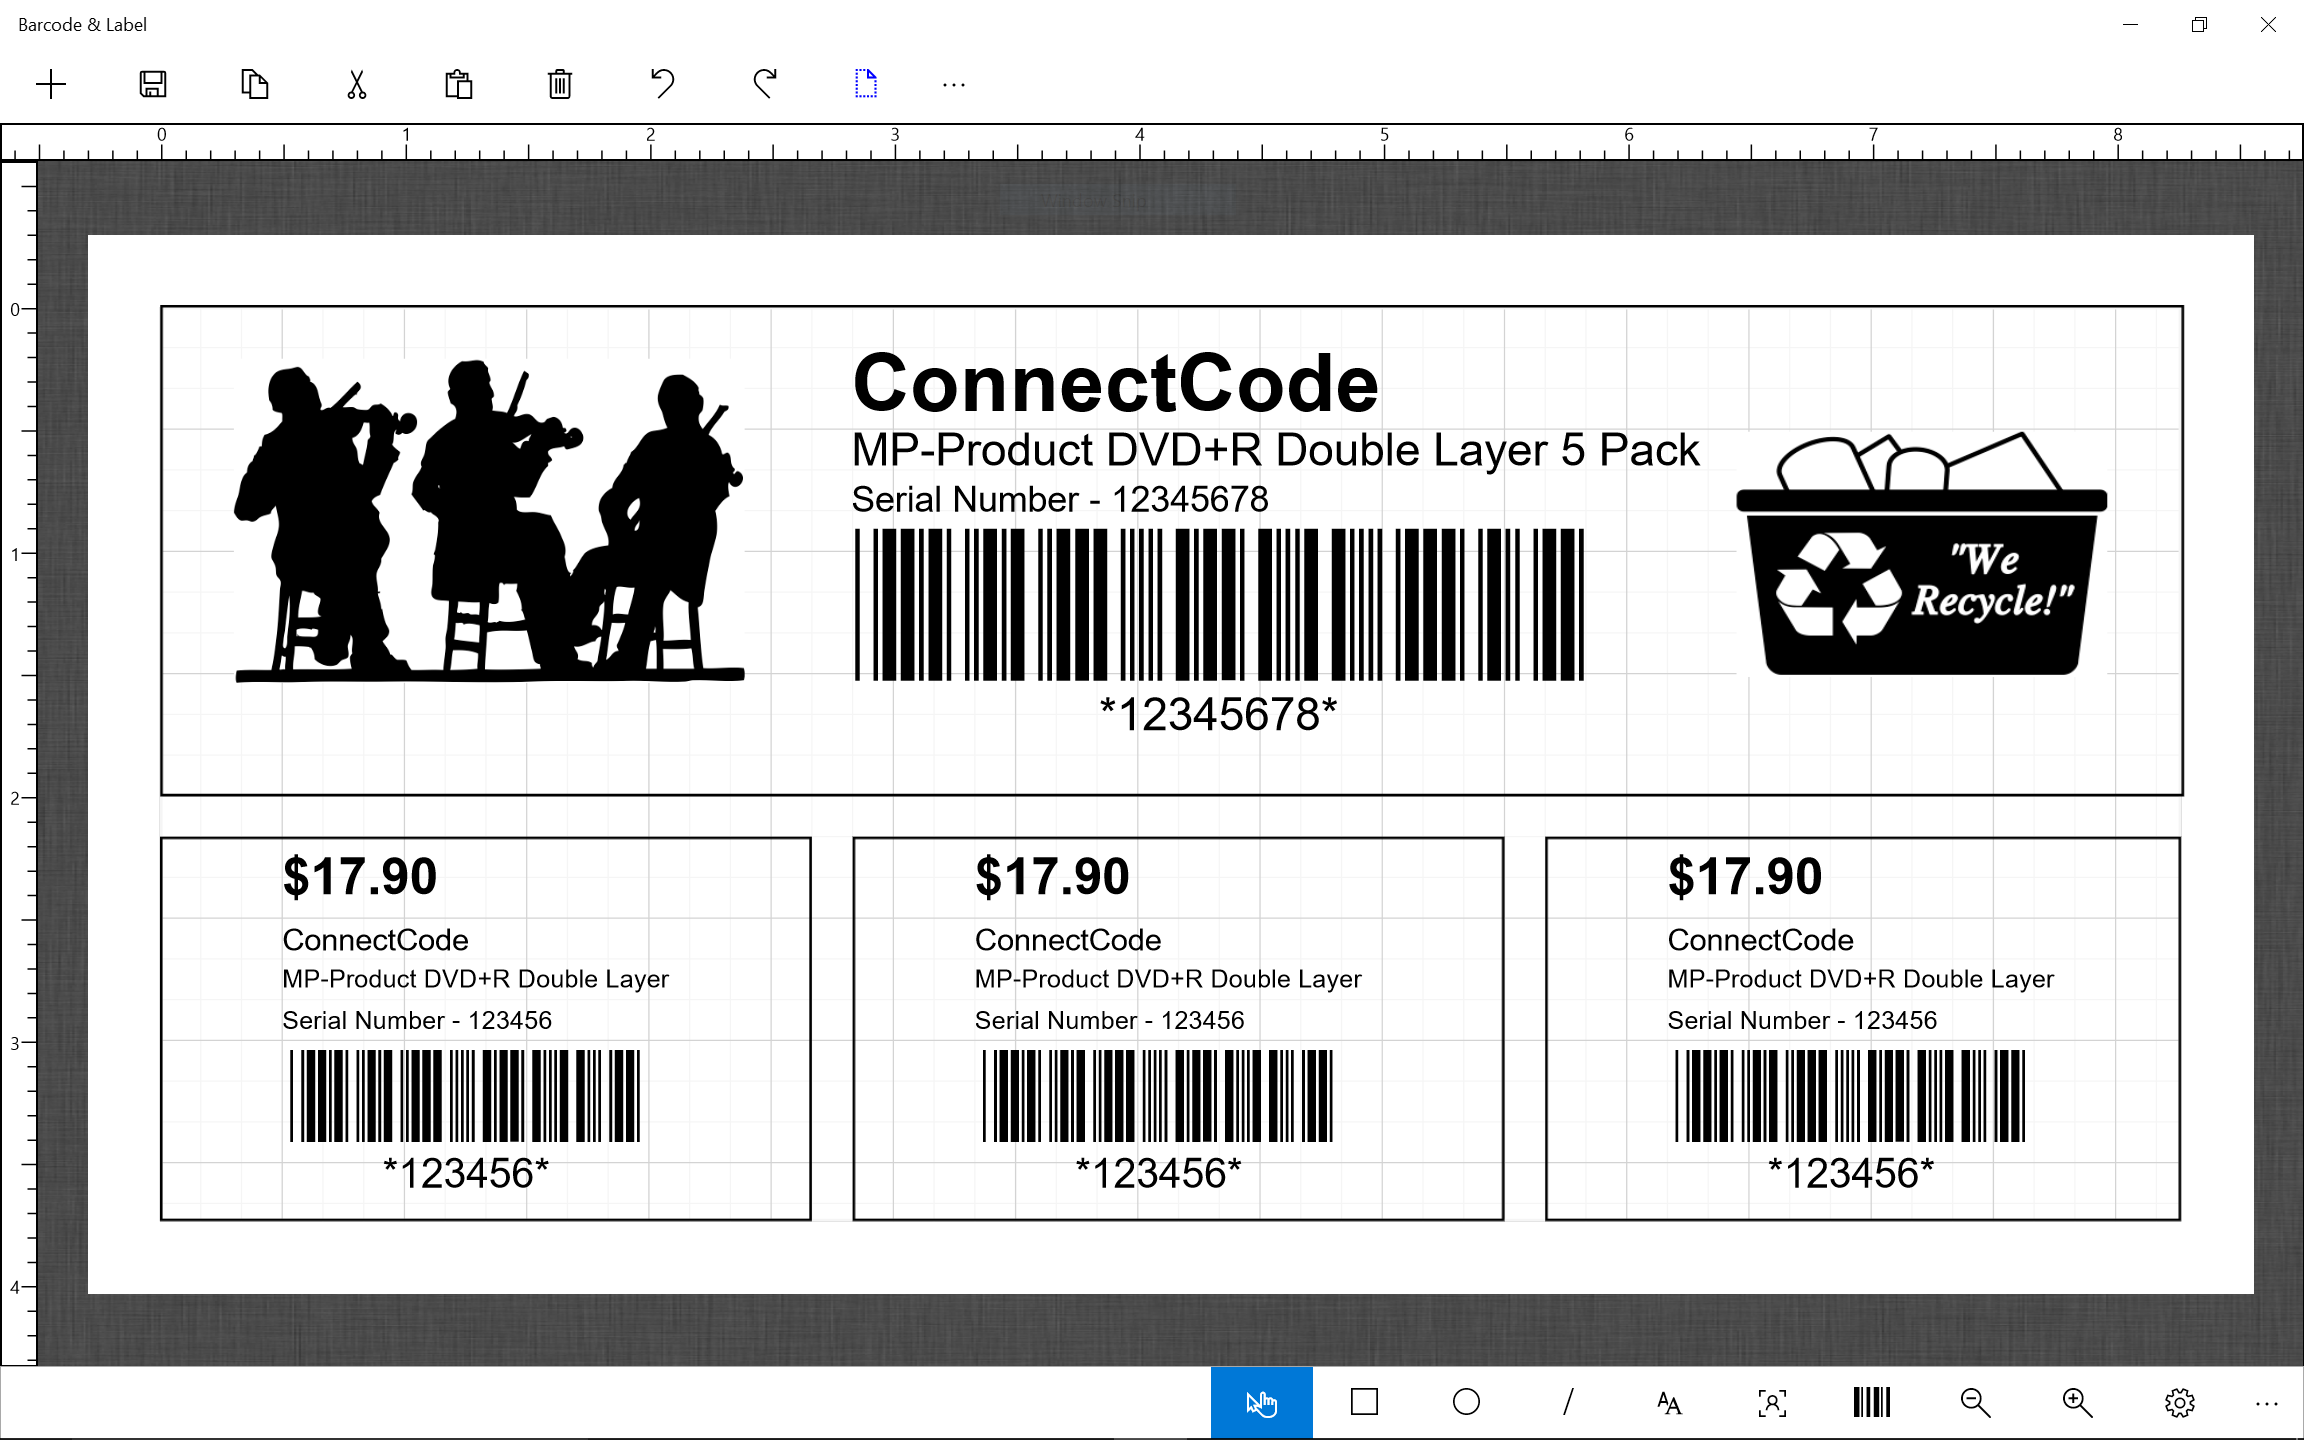 Barcode & Label Universal Windows Platform